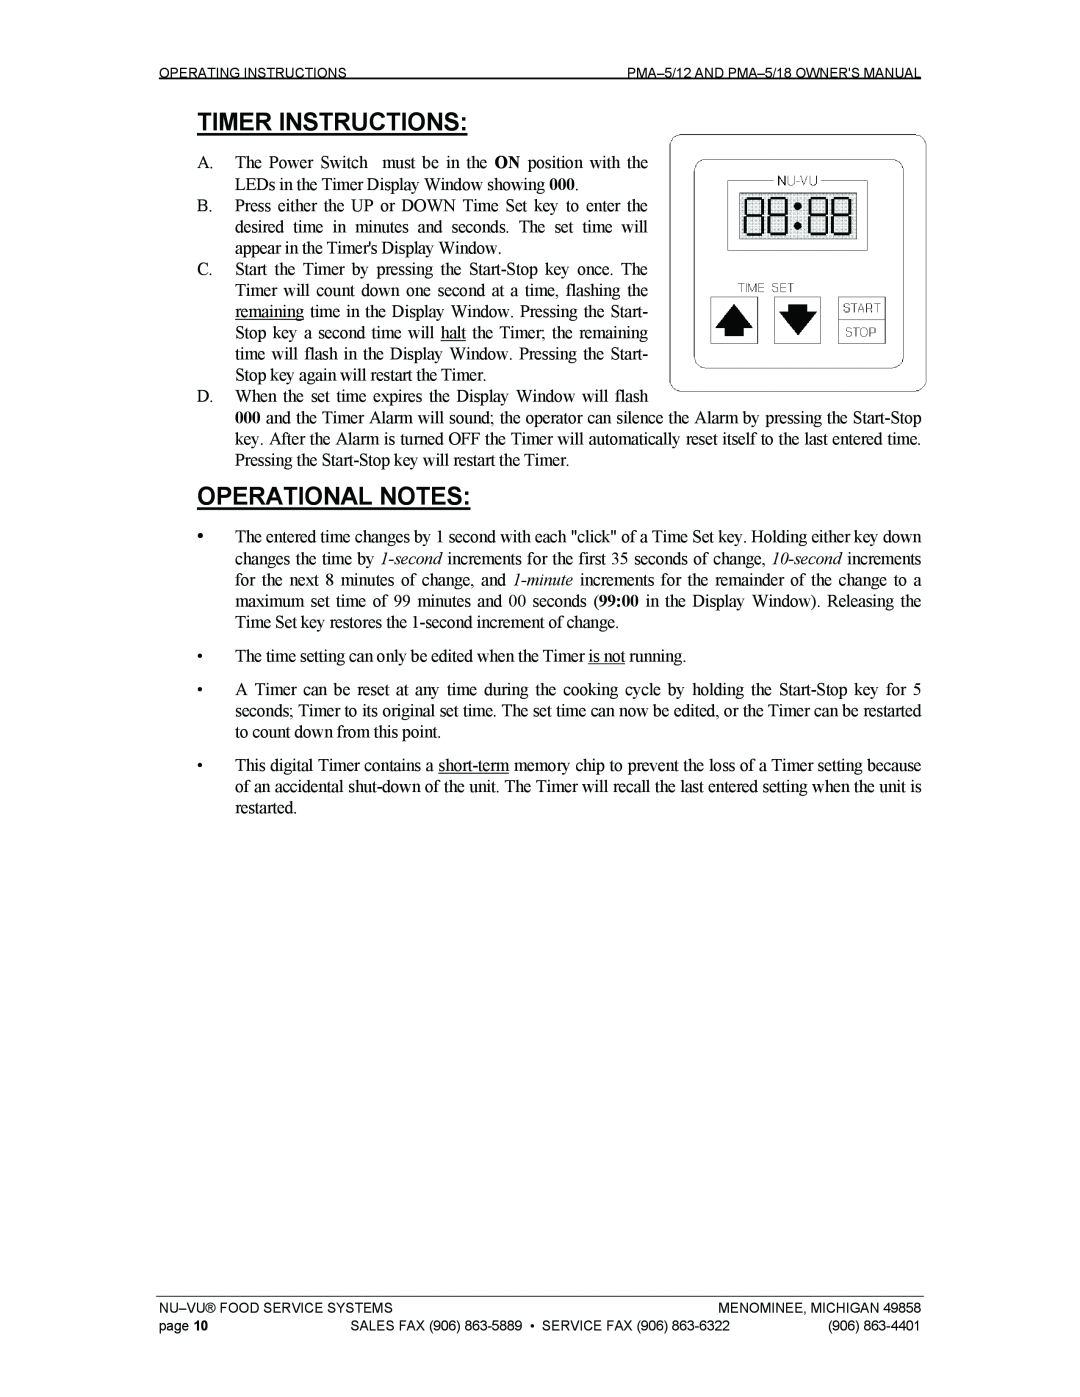 Nu-Vu PMA 5/18, PMA -5/12 owner manual Timer Instructions, Operational Notes 